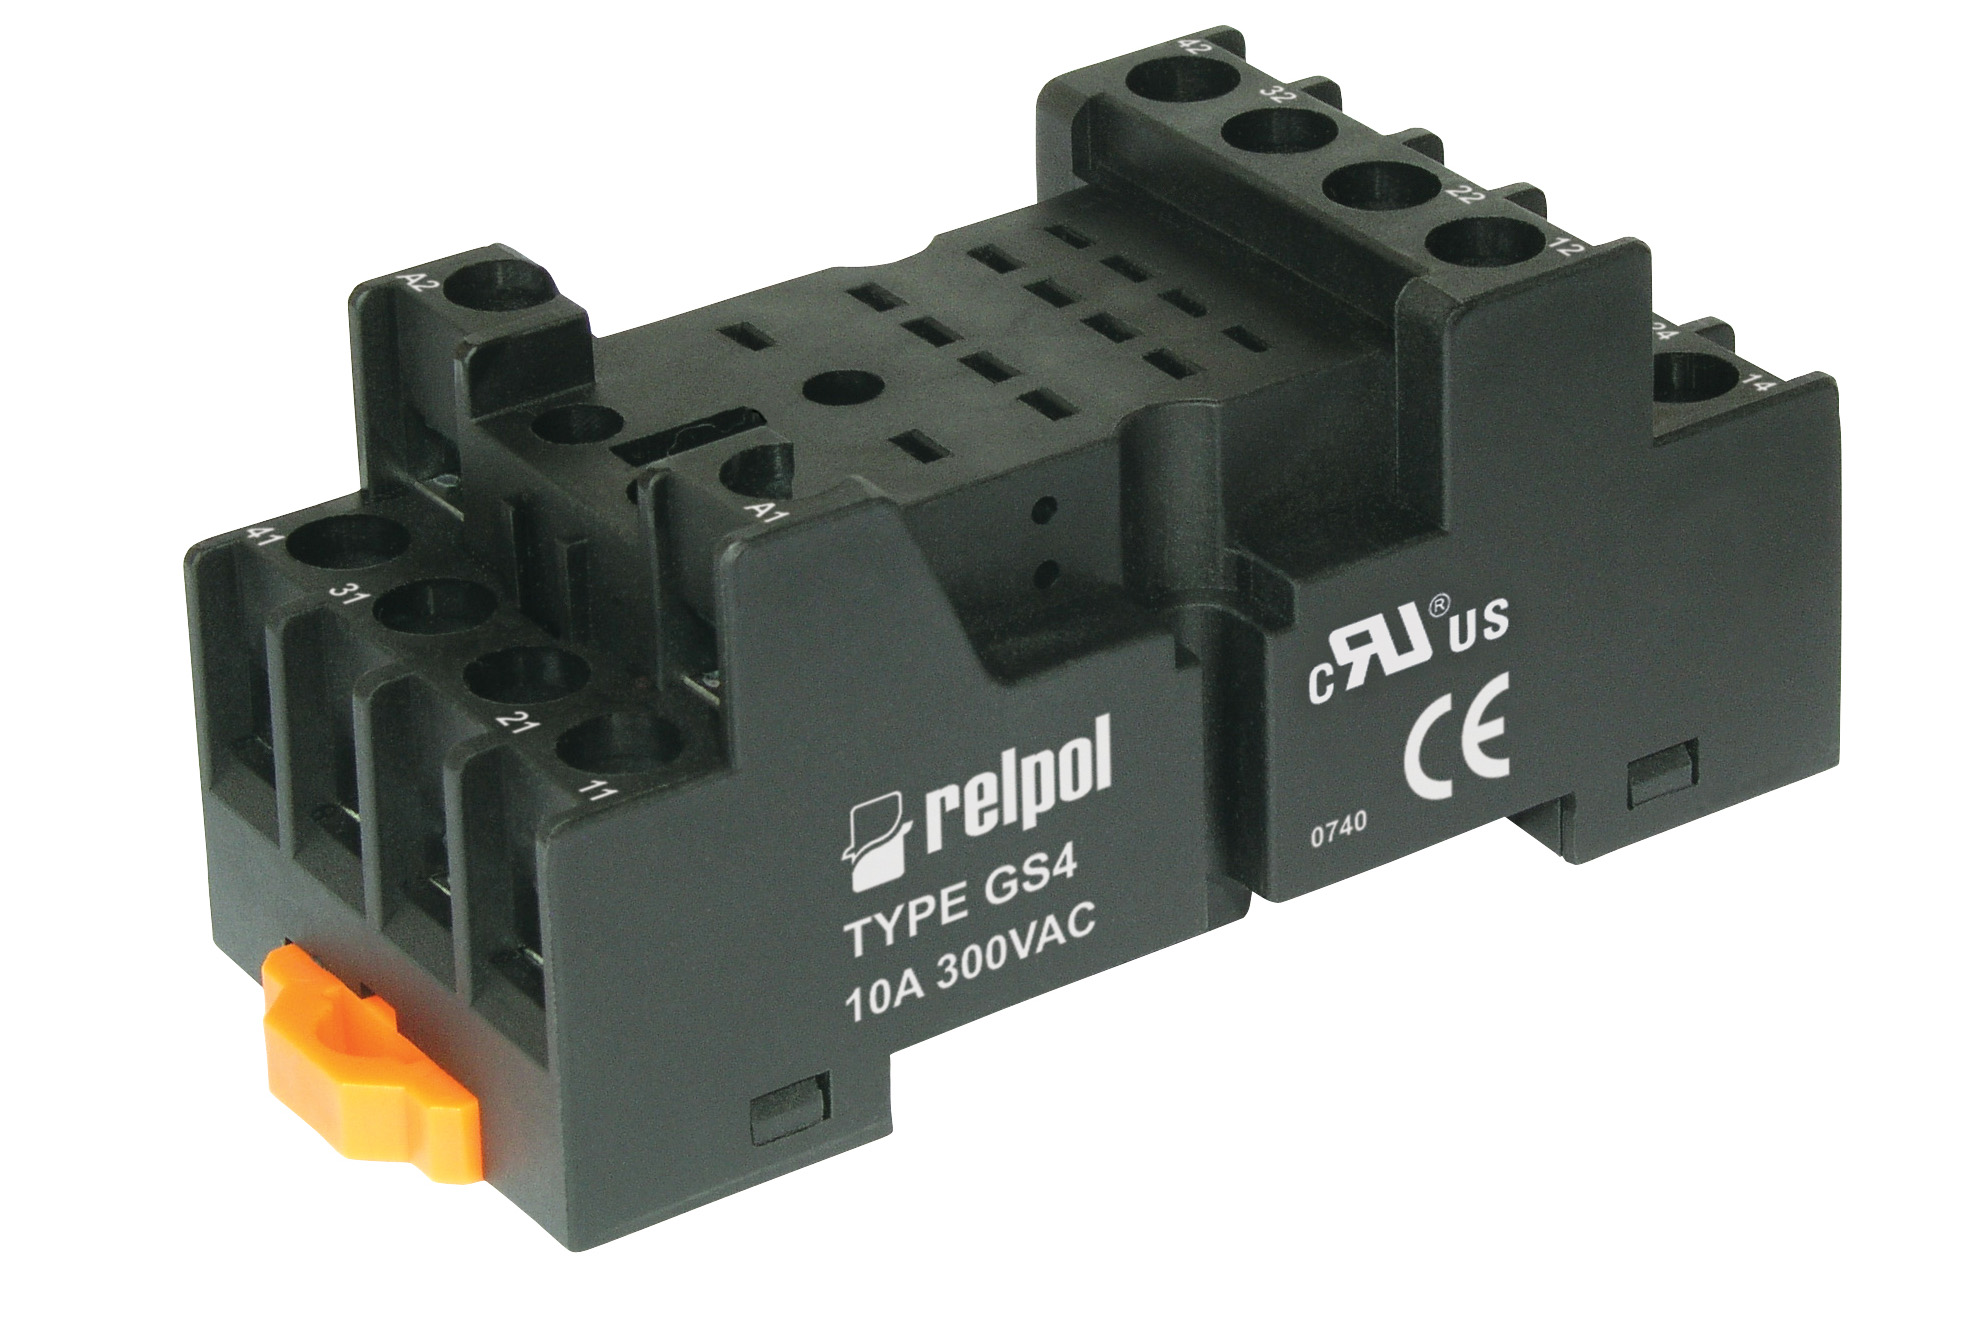 Đế relay GS4 cho relay trung gian Relpol R4N 4CO 10A 300Vac